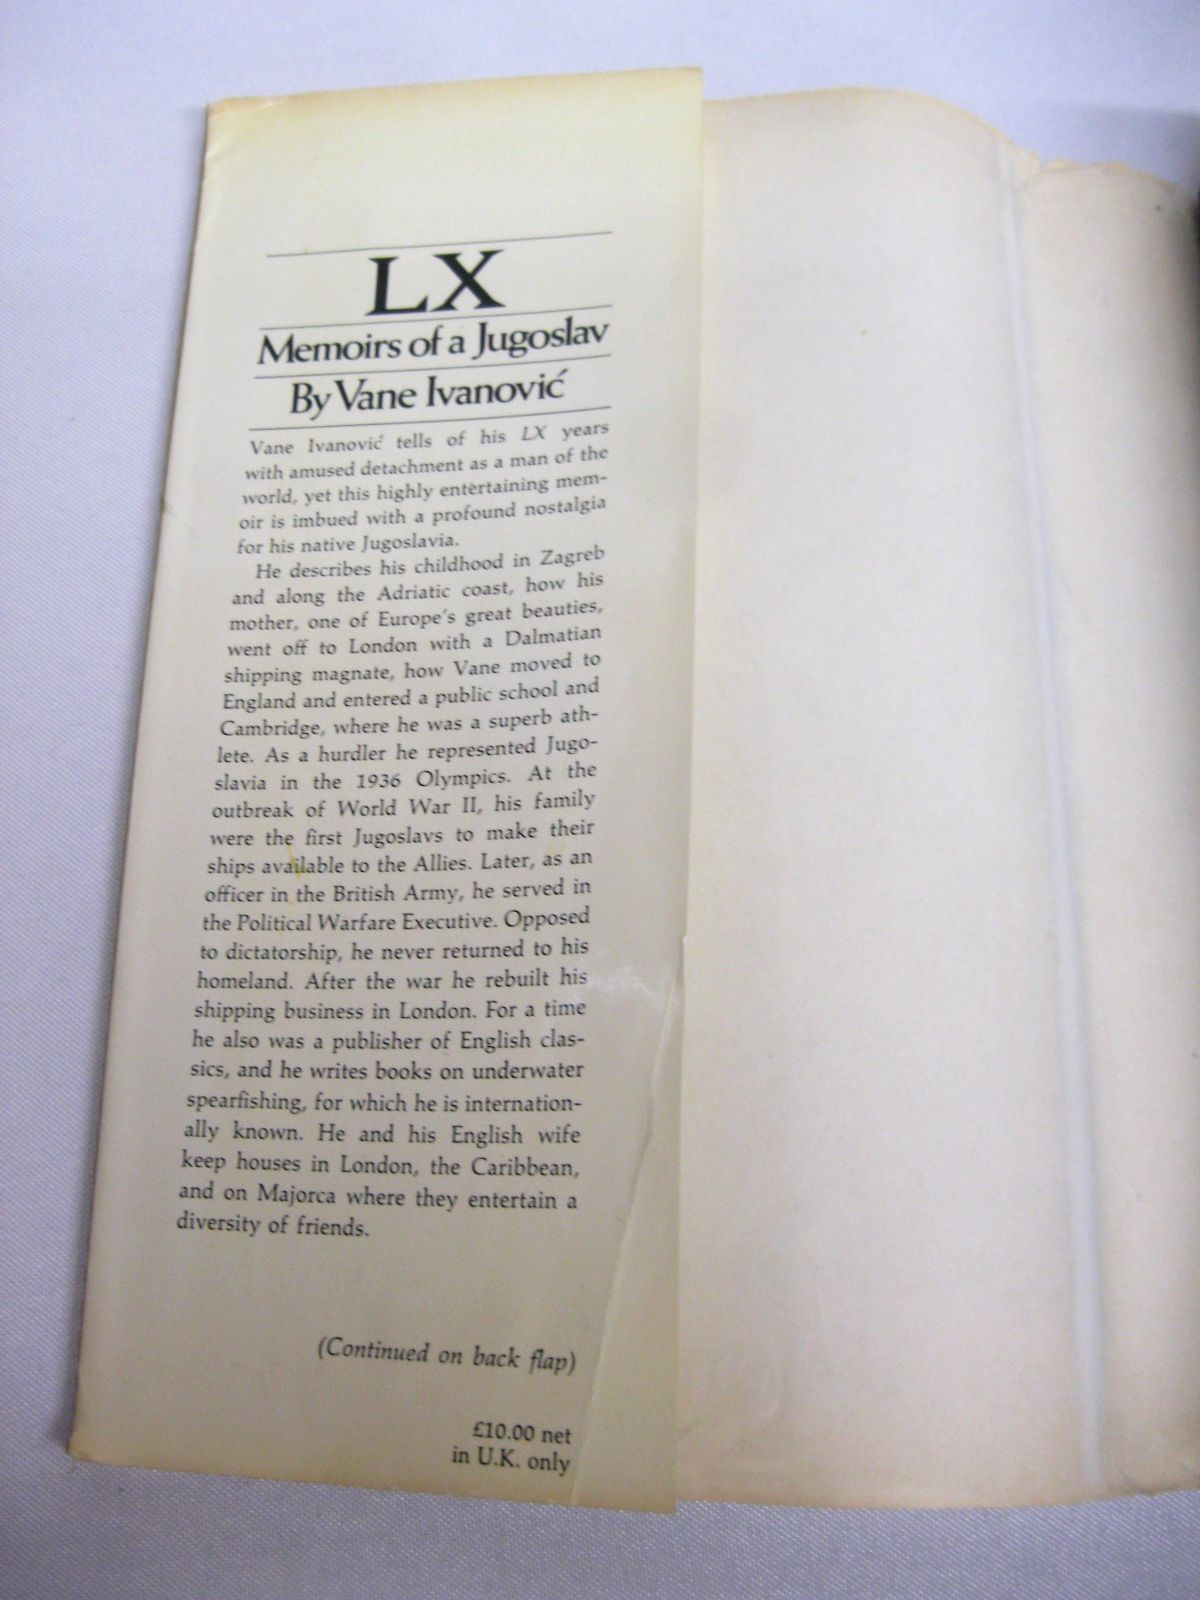 LX: Memoirs of a Jugoslav by Vane Ivanovic